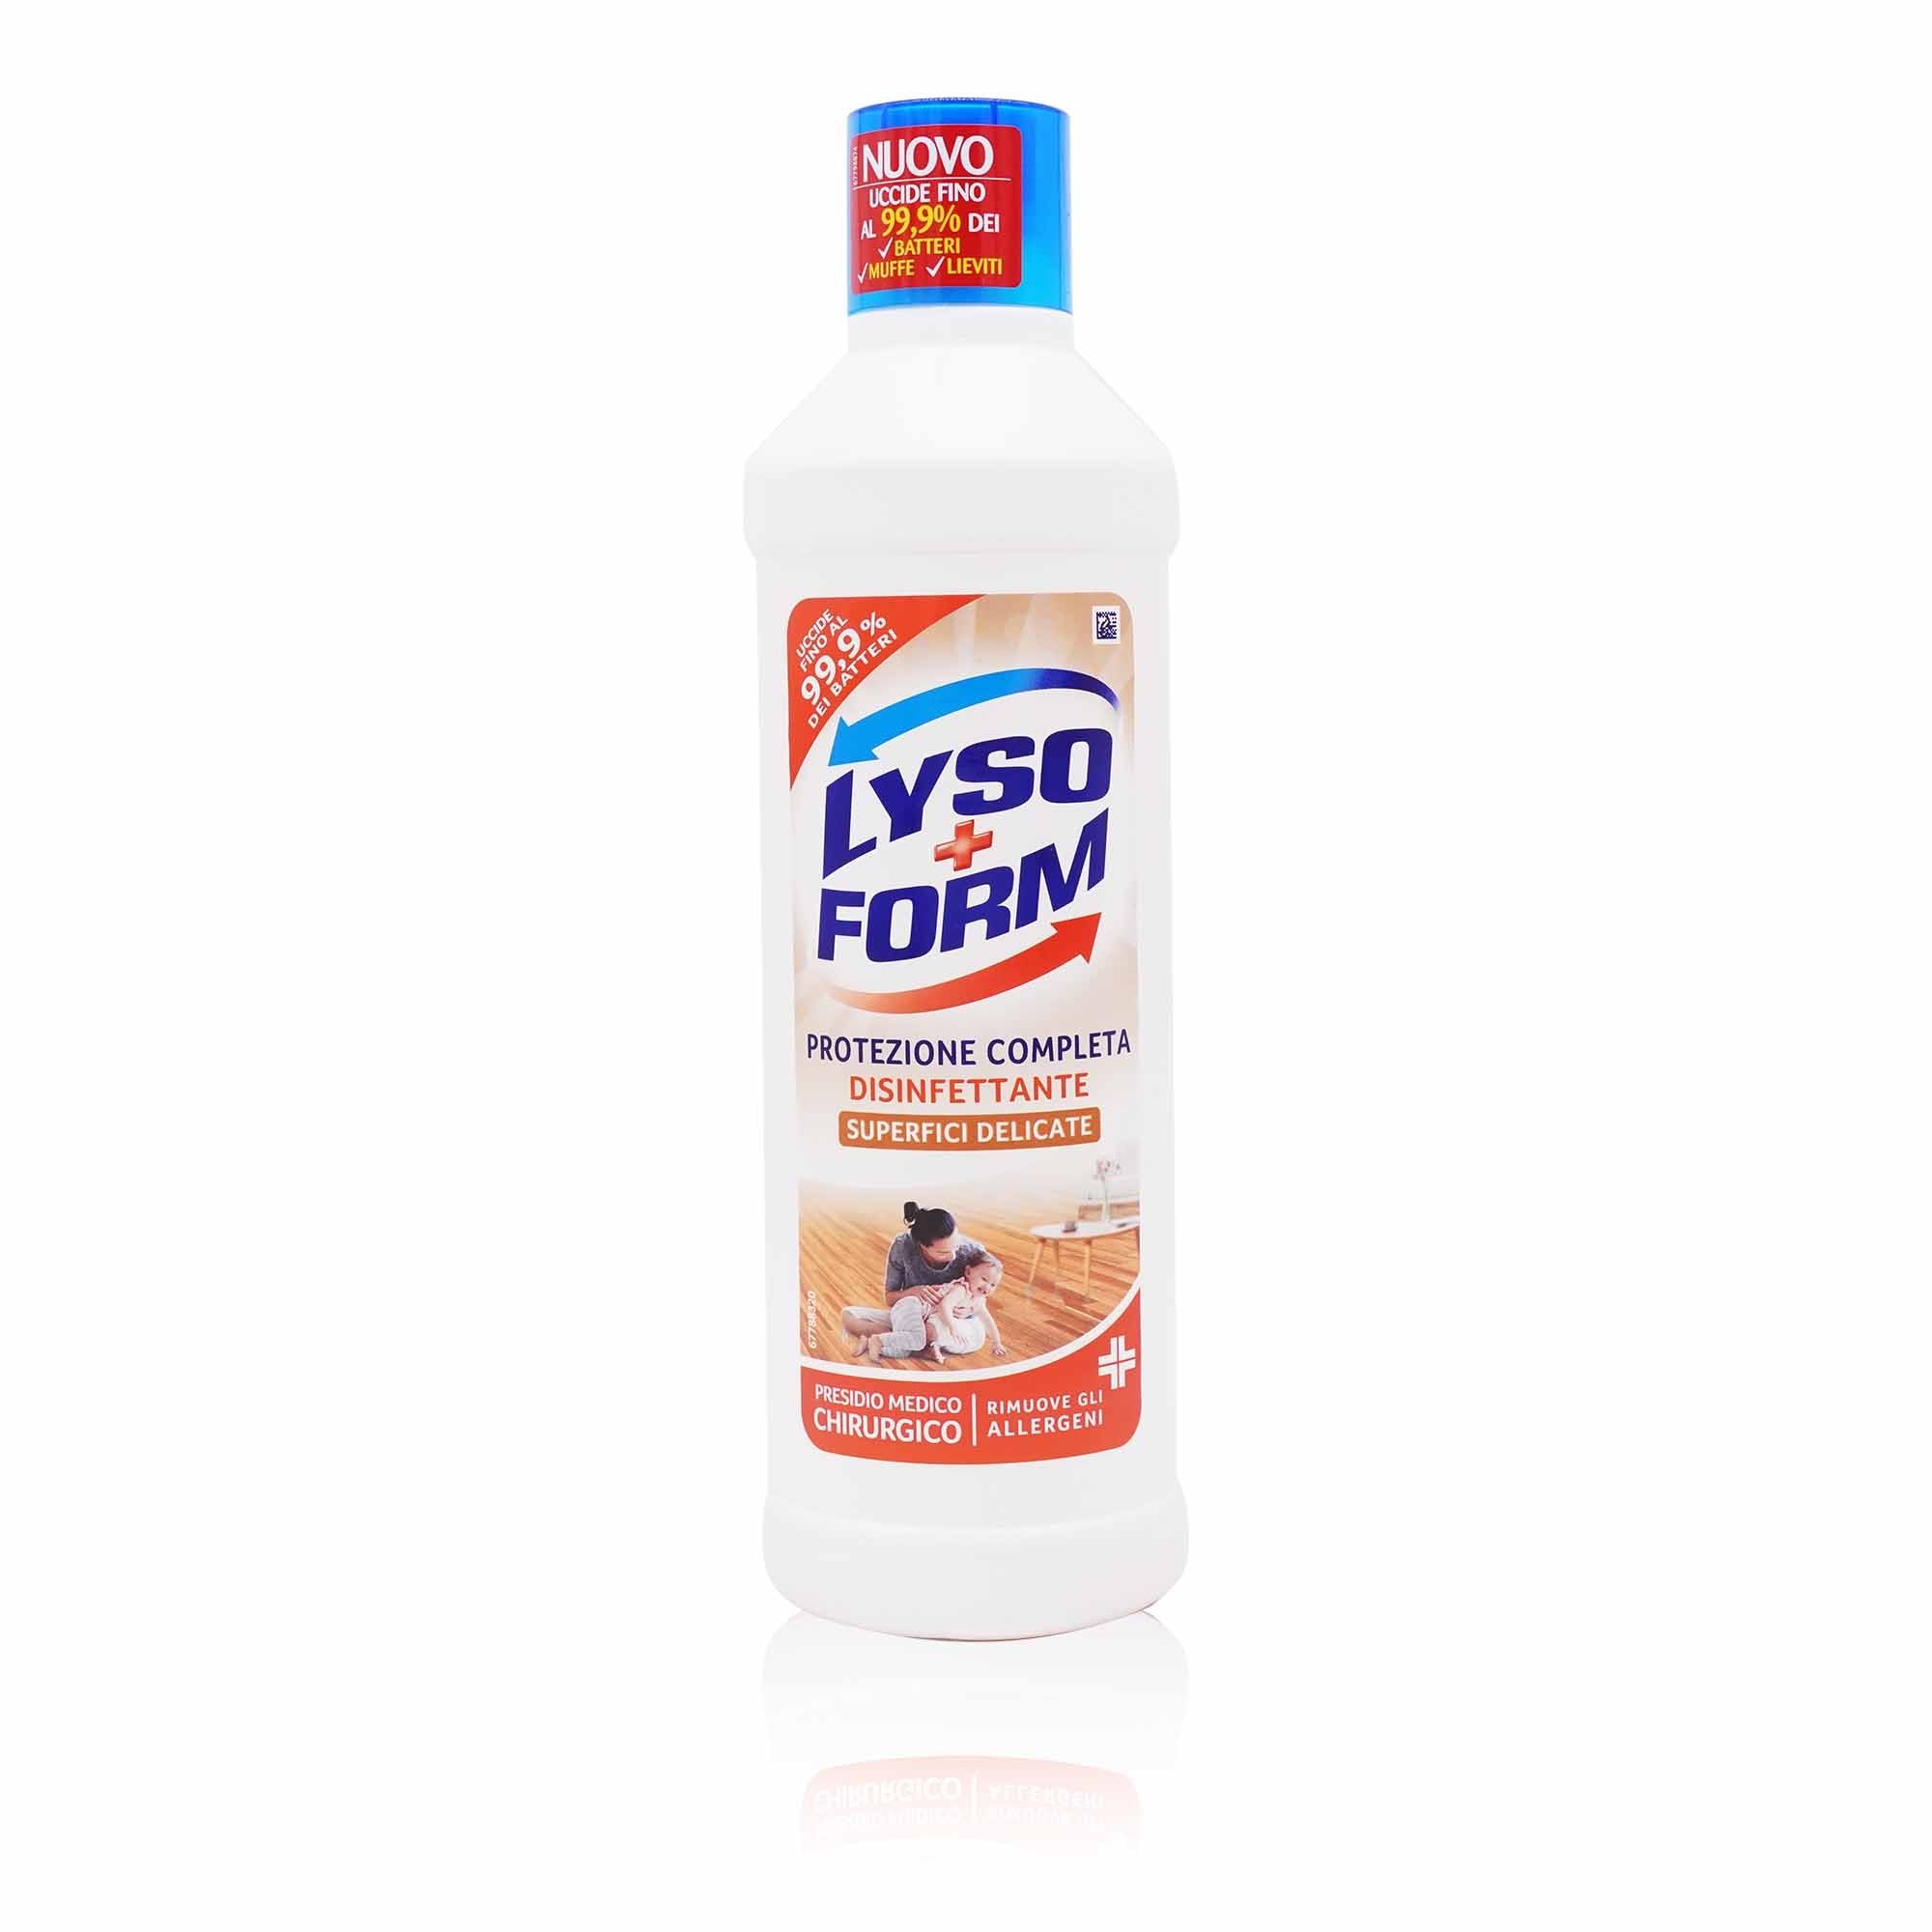 LYSO FORM Disinfettante superfici delicate – Reinigungs-Desinfektionsmittel - 0,9l